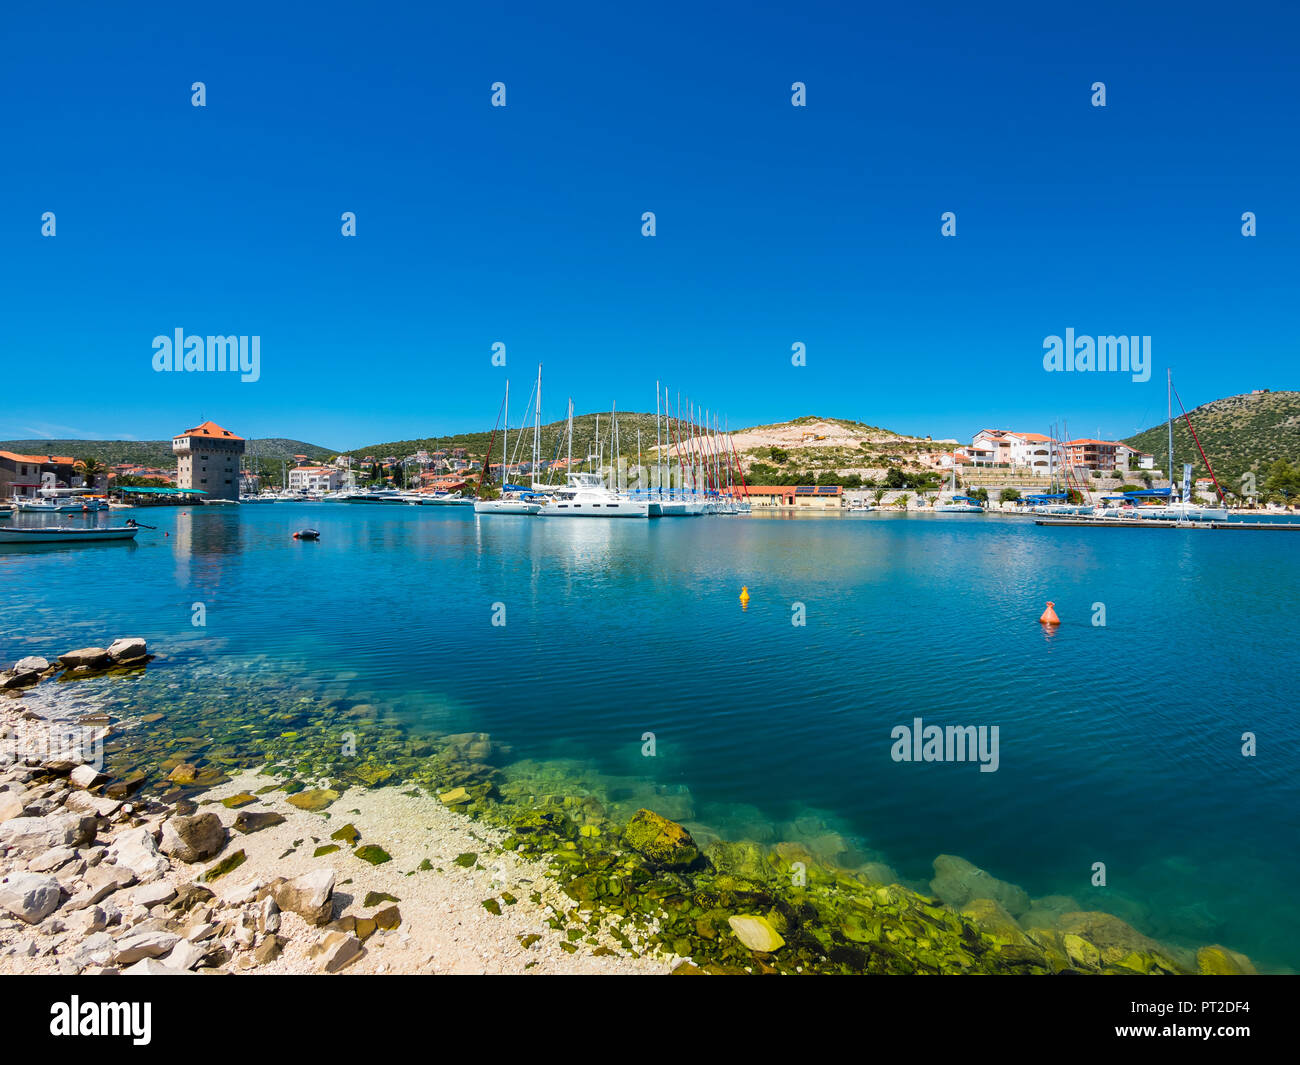 Croatia, Dalmatia, Adriatic Sea, Fishing village Marina, Bay with sailing boats Stock Photo